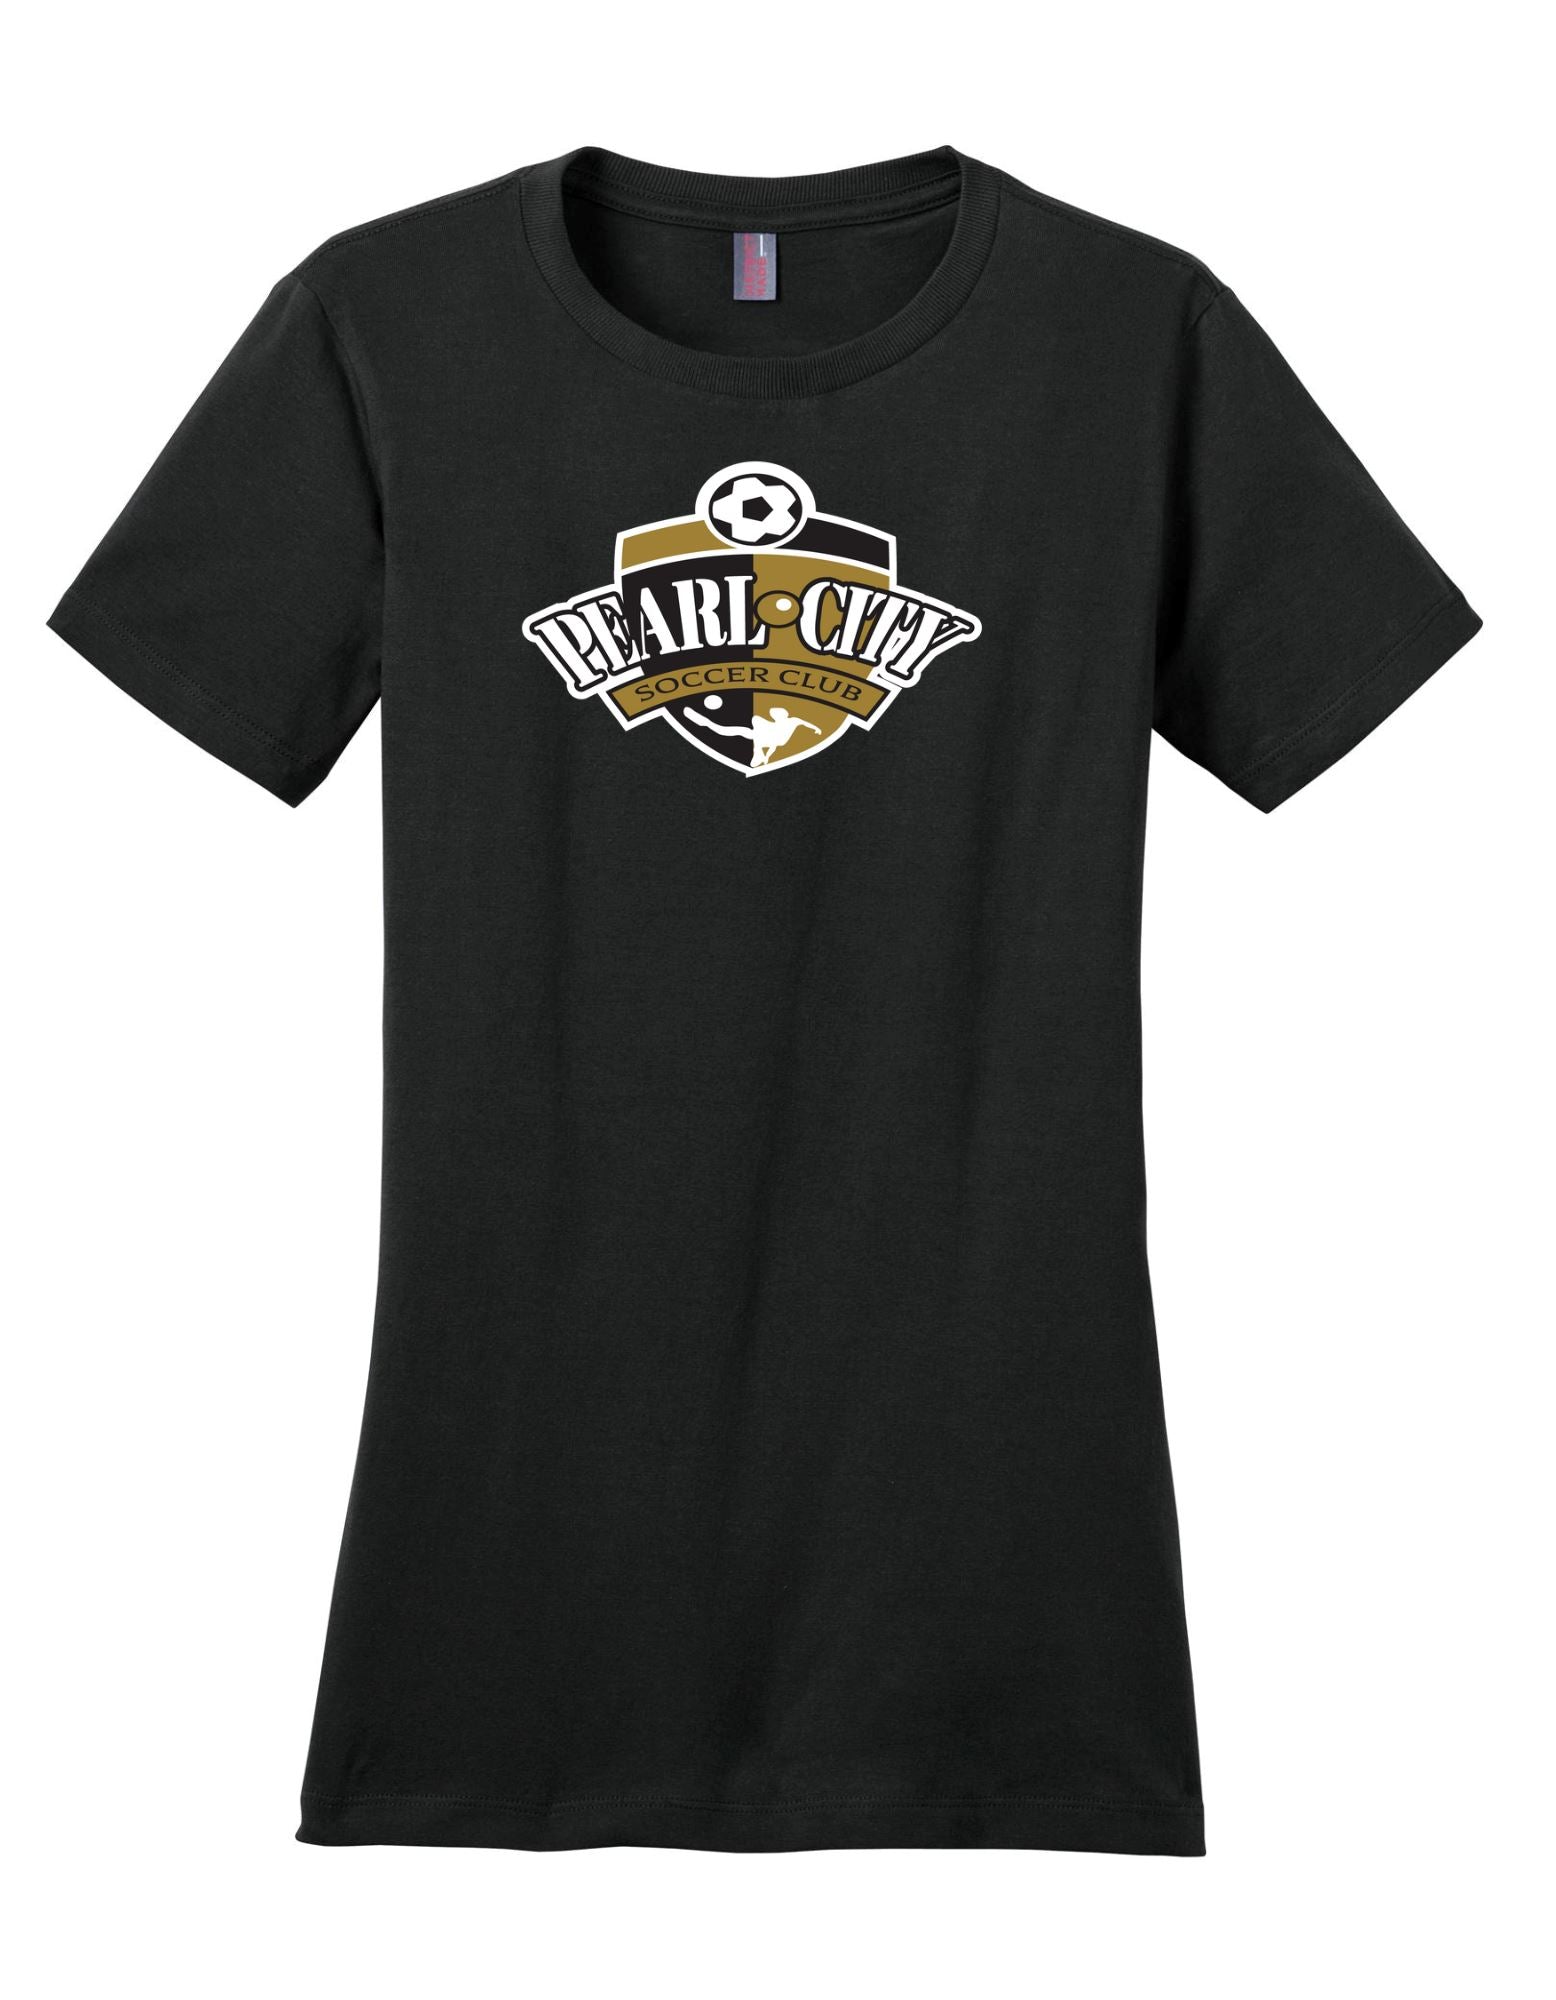 Pearl City Soccer Club Women's Tee Shirt Goal Kick Soccer X-Small Jet Black 